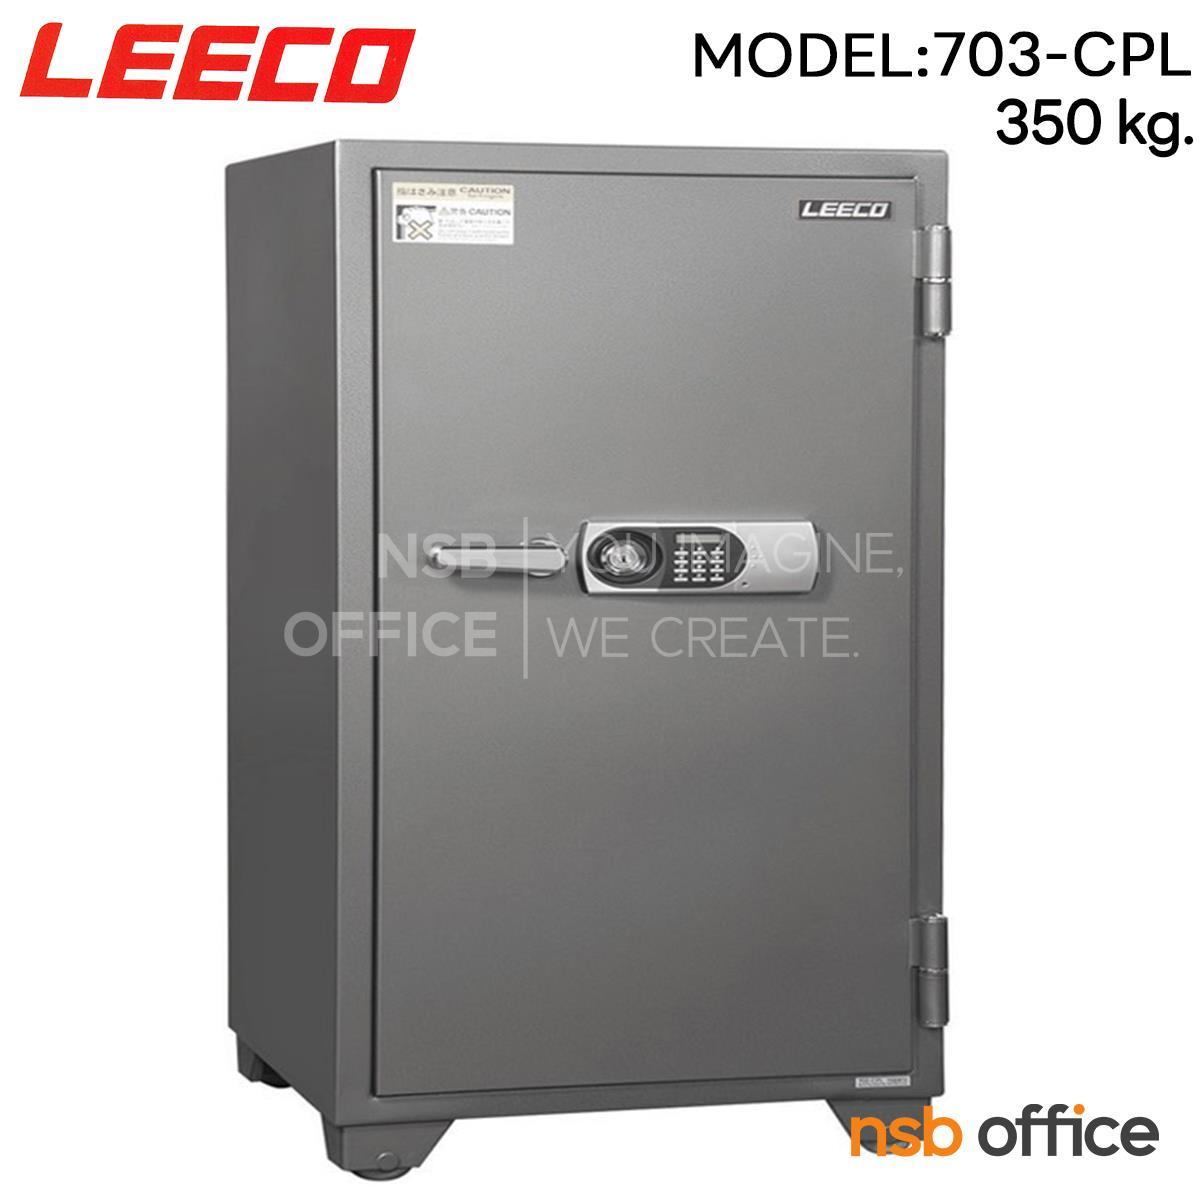 F02A073:ตุ้เซฟดิจิตอล 350 กก. ลีโก้ รุ่น LEECO-703-CPL มี 1 กุญแจ 1 รหัส   